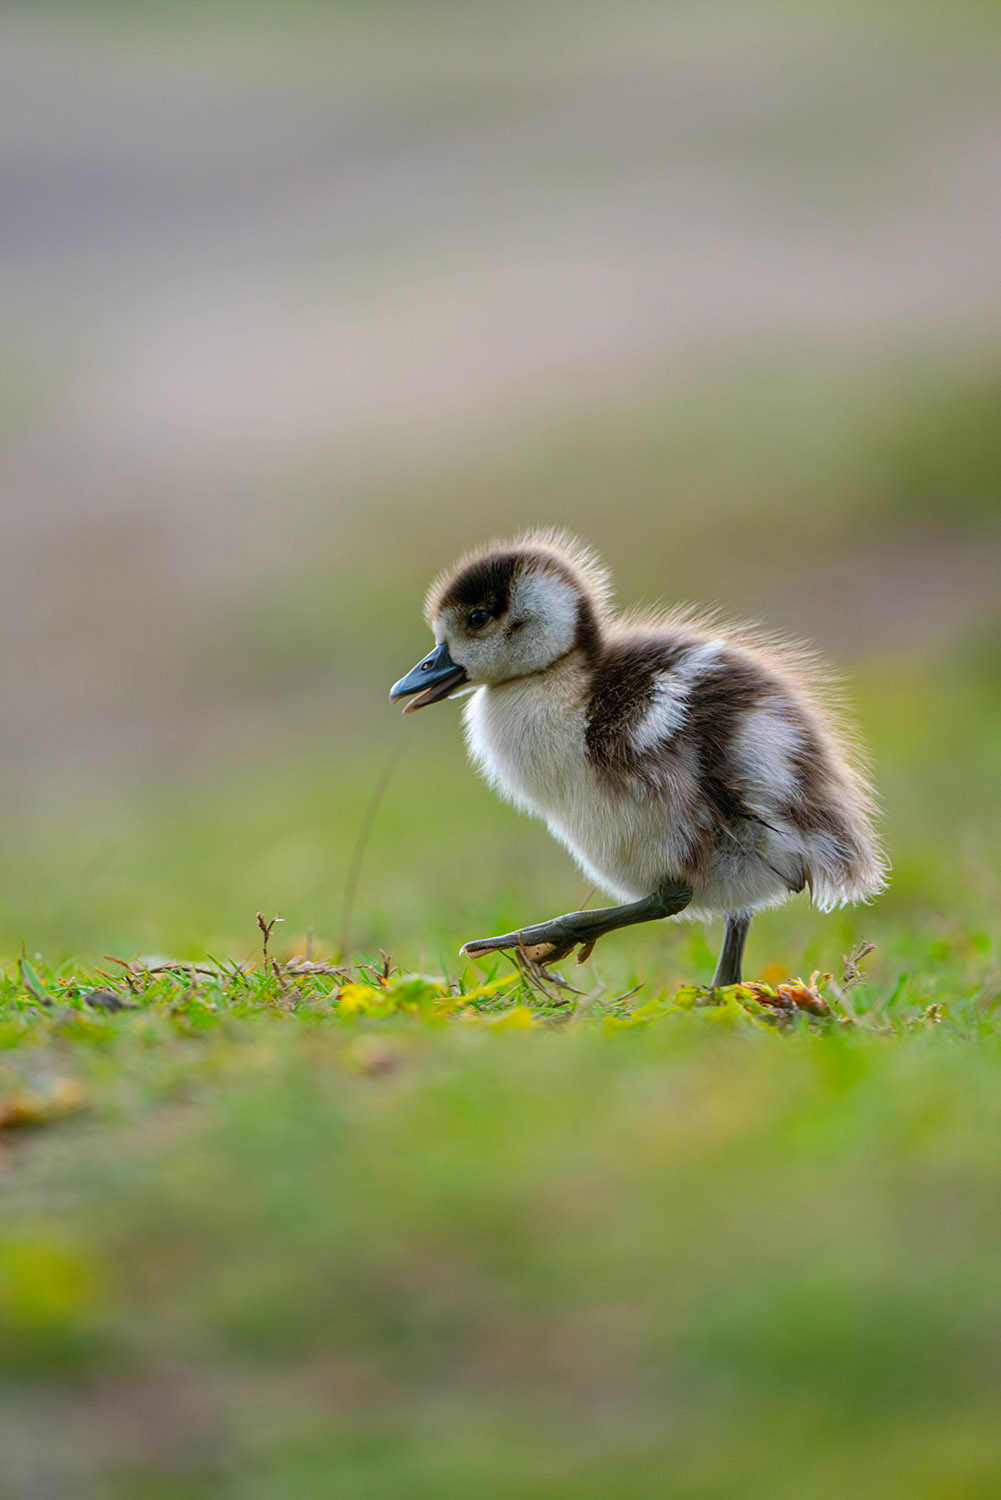 A gosling taking a walk